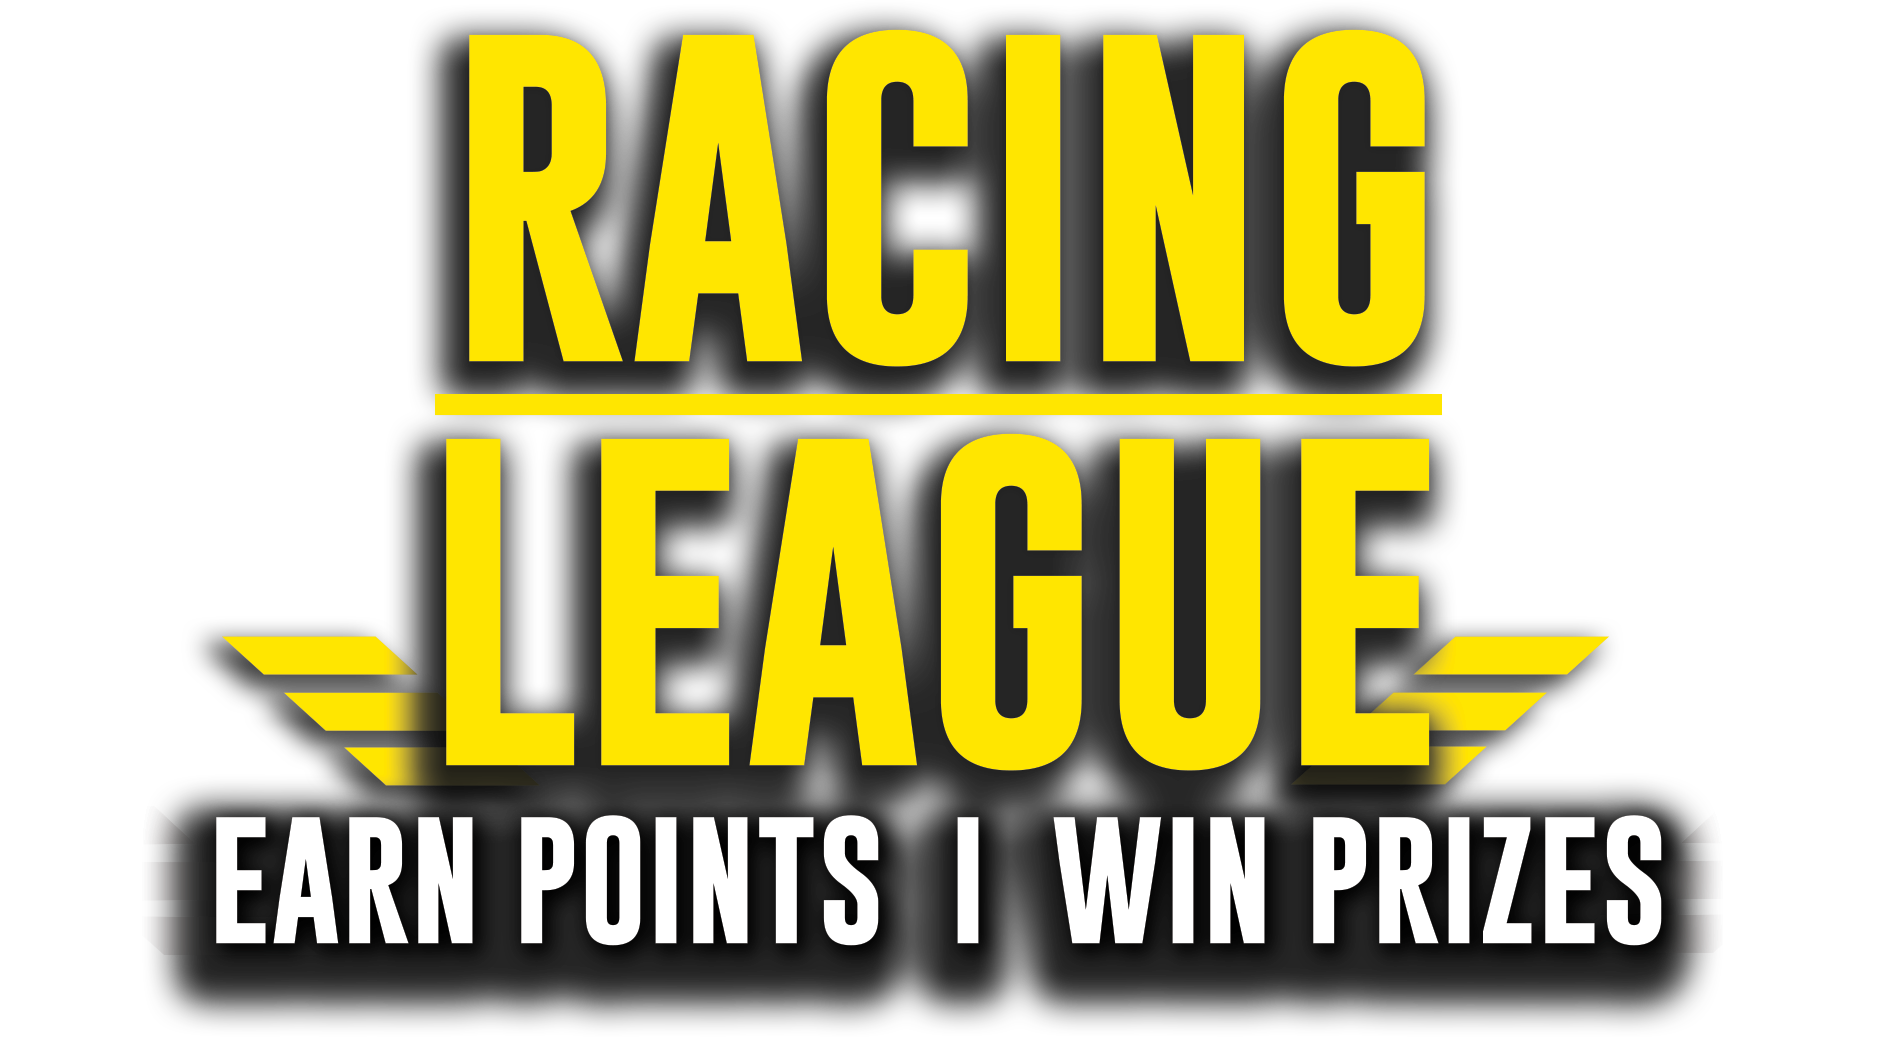 Racing League - Earn points, win prizes